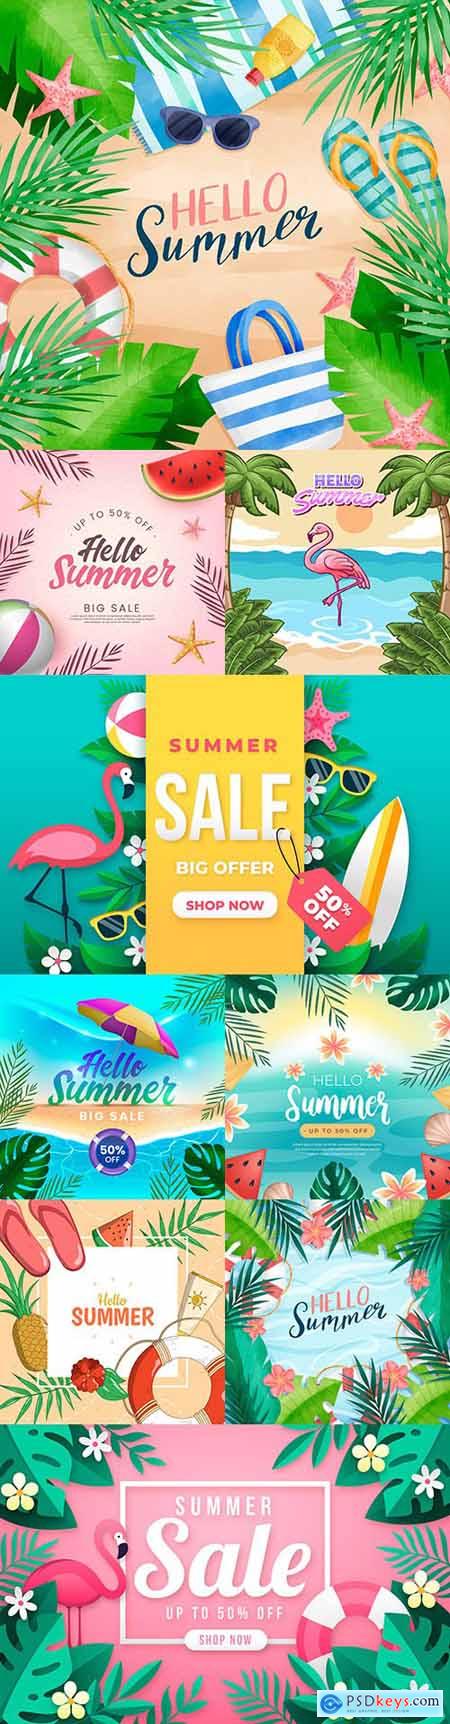 Hello summer seasonal sale design with tropical leaves